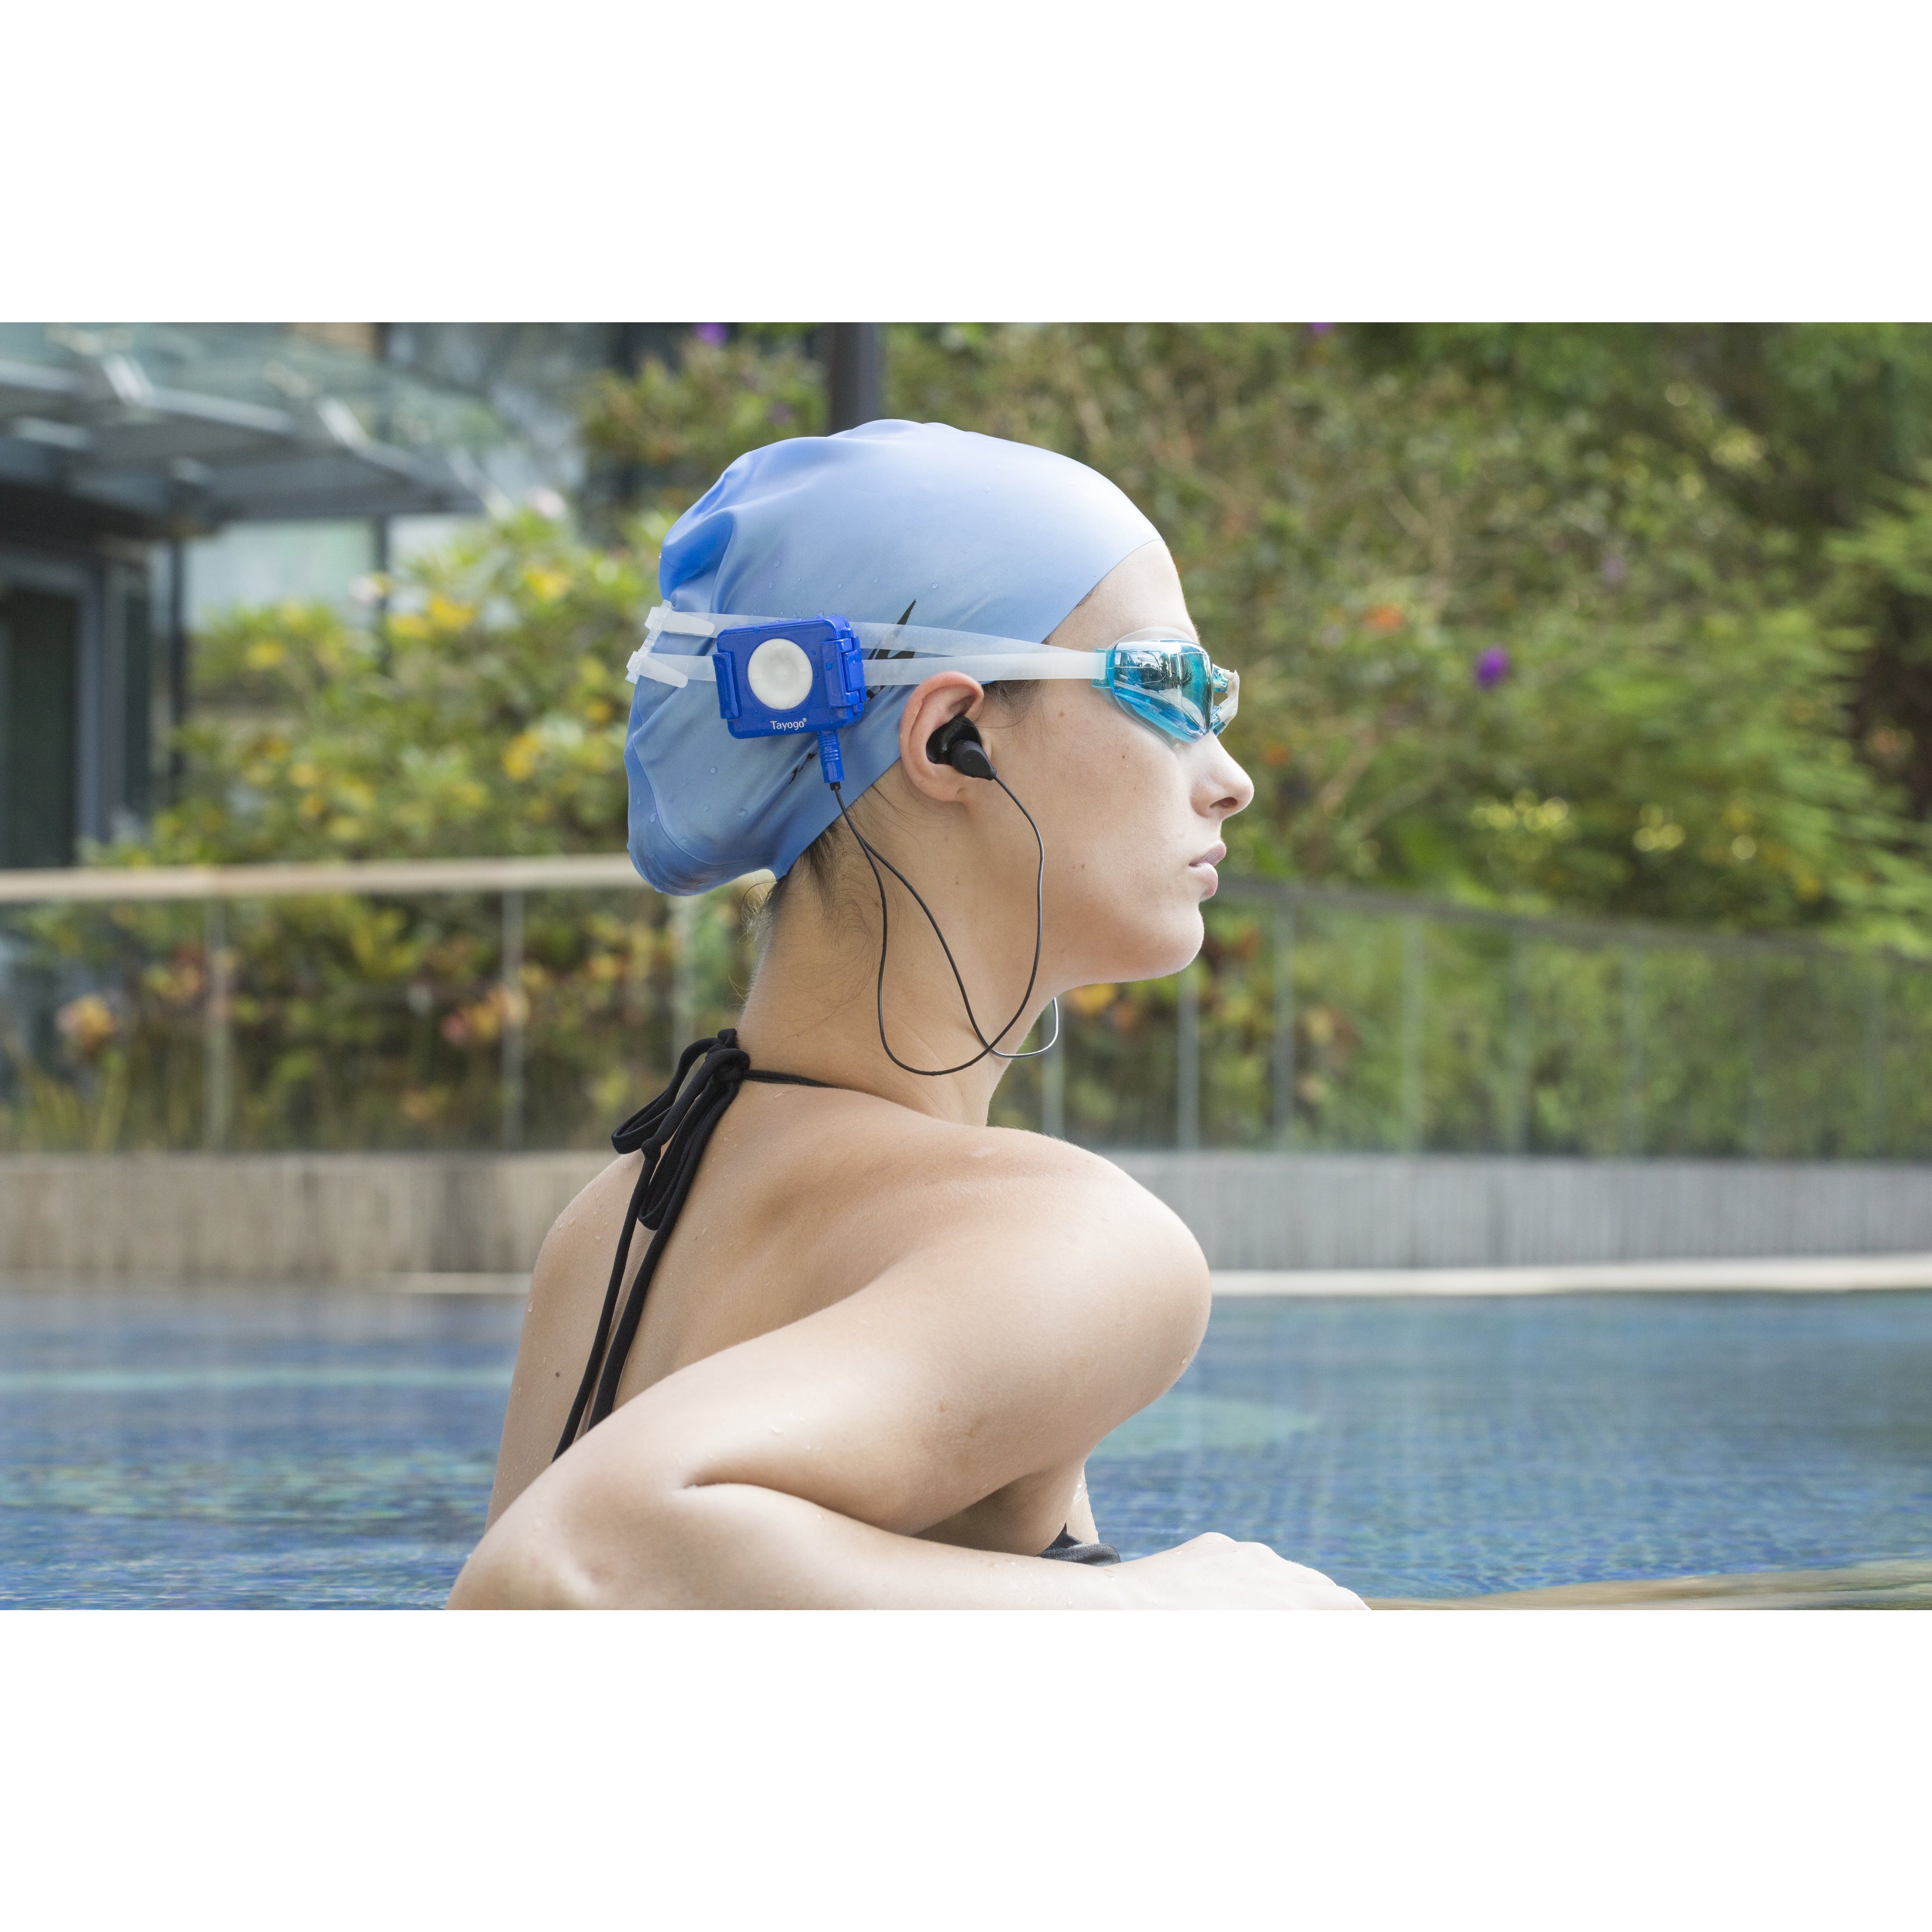 Tayogo IPod Shuffle Mate Waterproof iPod Case for Swimming sufing